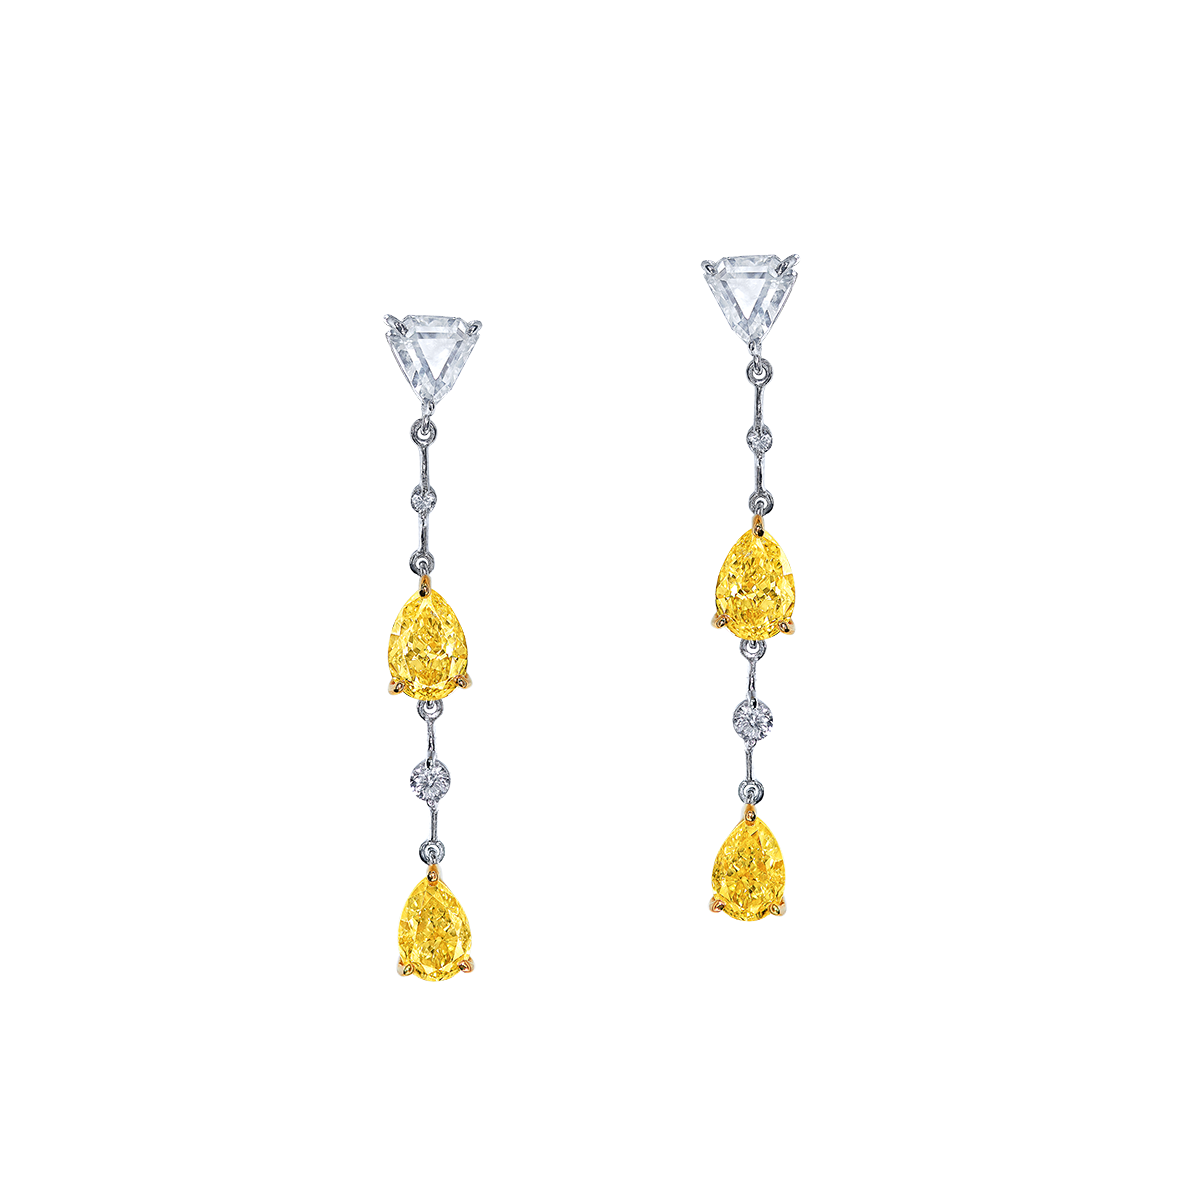 GIA 2.02克拉 黃鑽鑽石耳環
Fancy Yellow - Fancy Intense Yellow
Colored Diamond Earrings